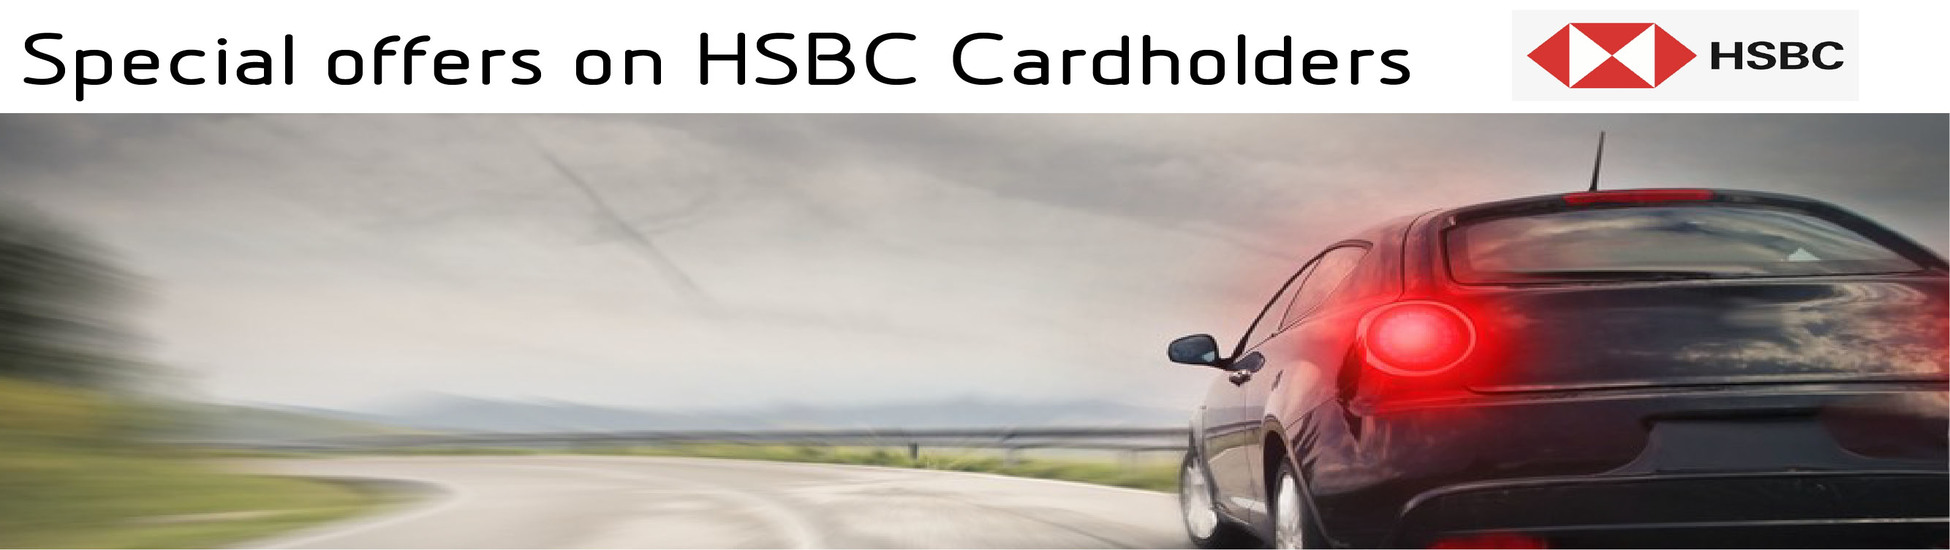 عرض خاص لبطاقات HSBC